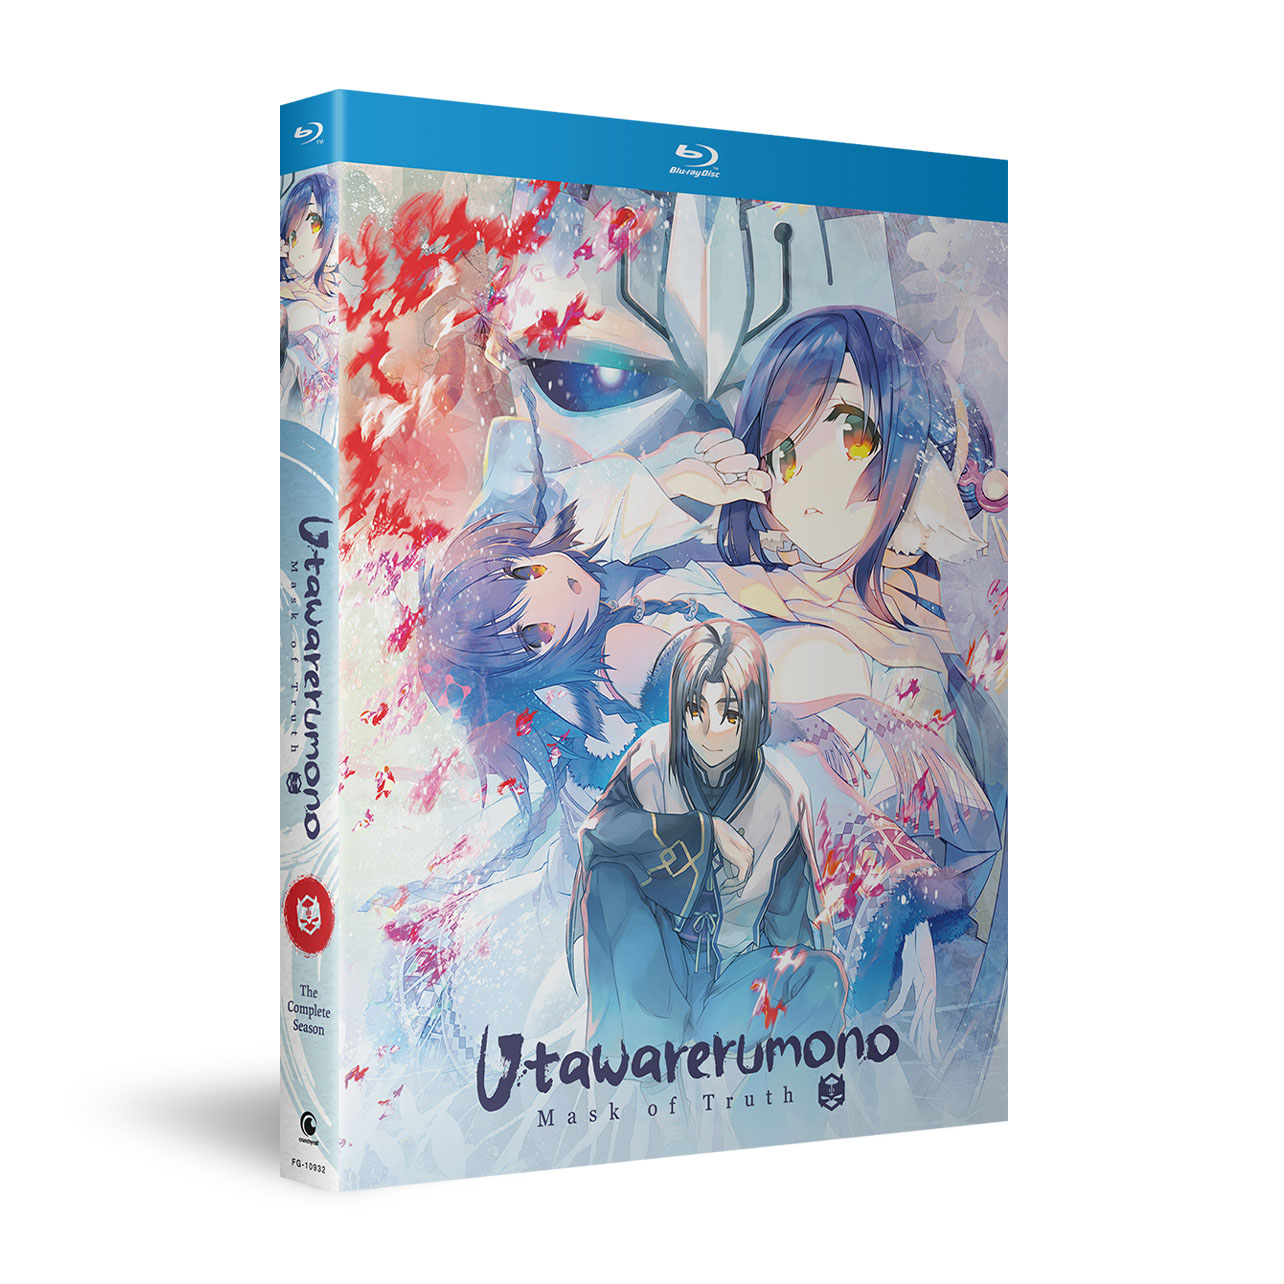 Utawarerumono Mask of Truth - The Complete Season - Blu-ray image count 2